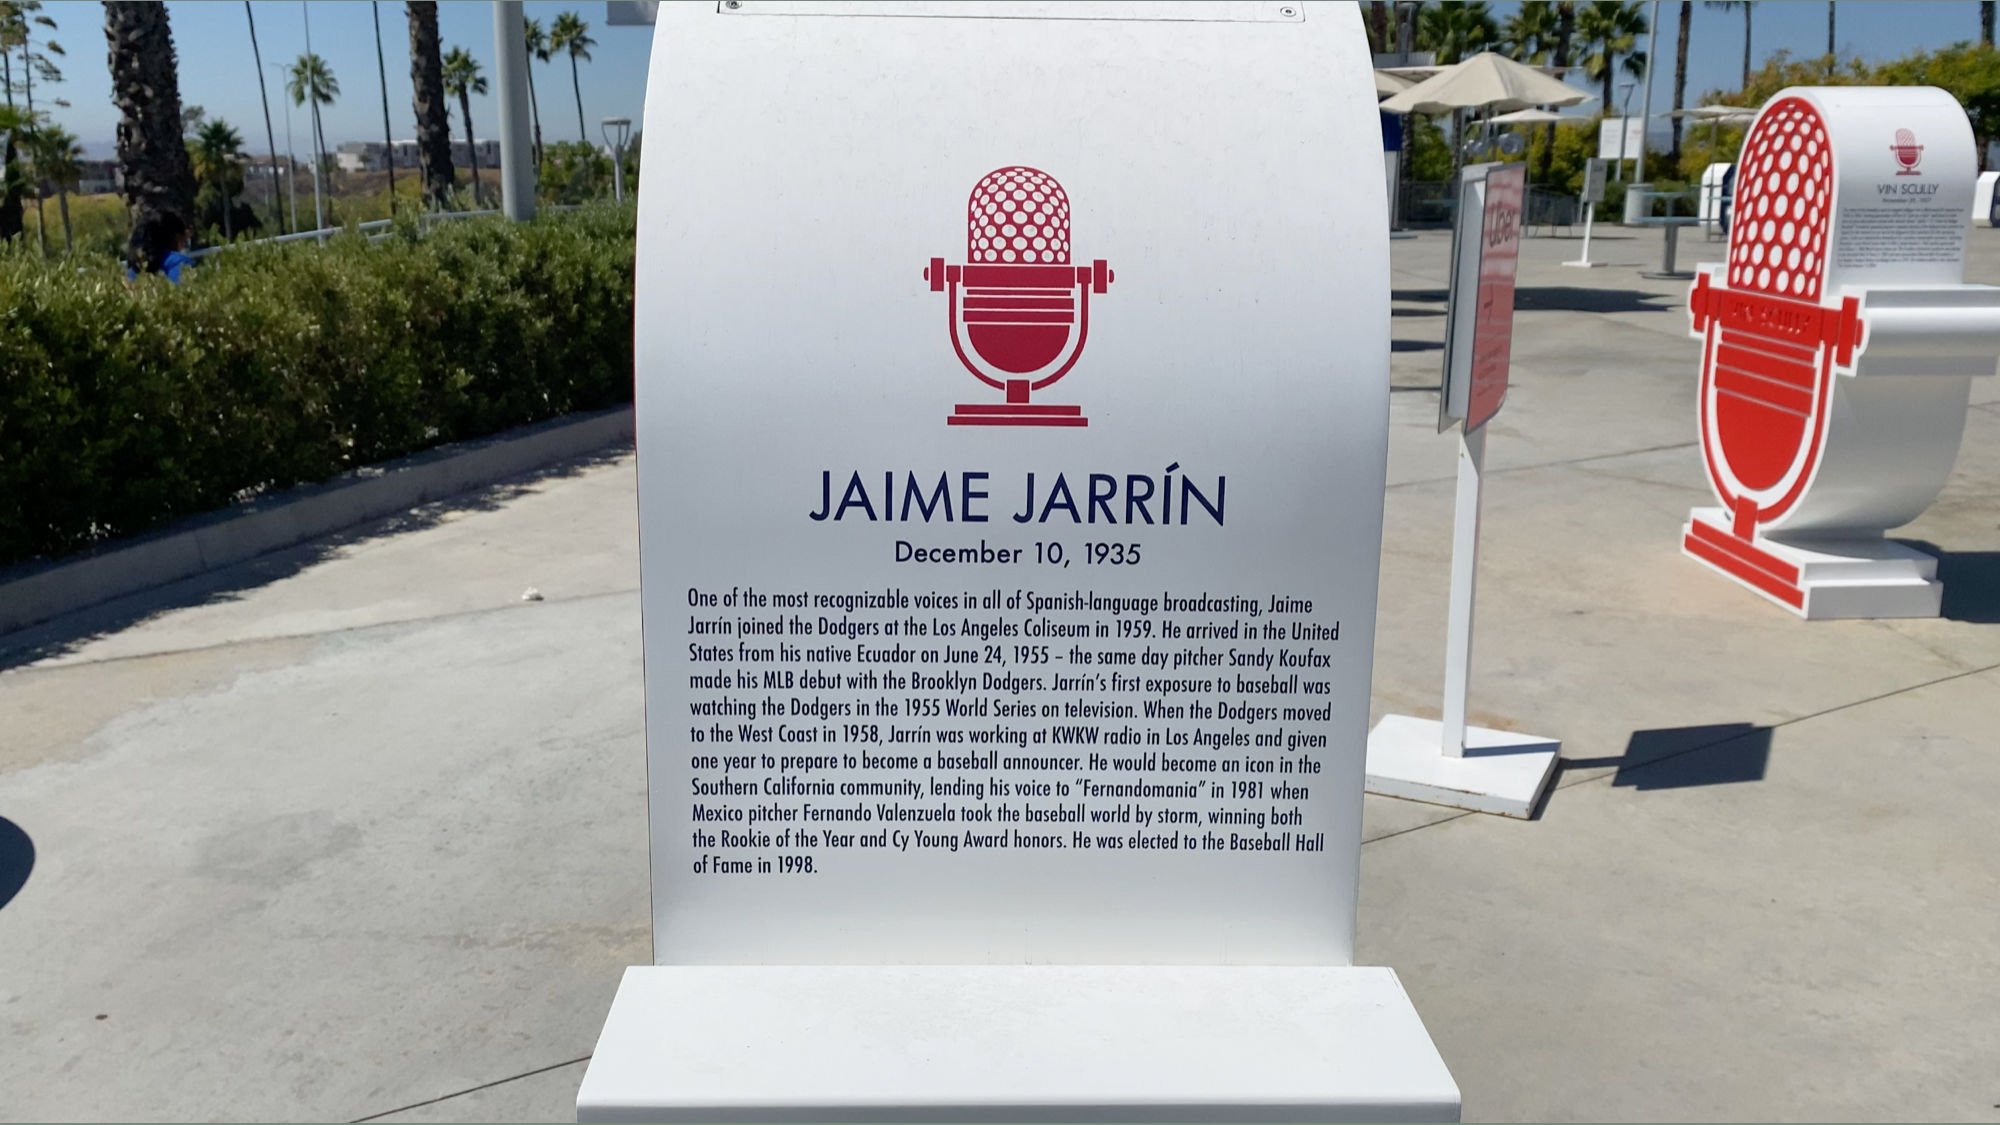 Broadcasting Jamie Jarrin